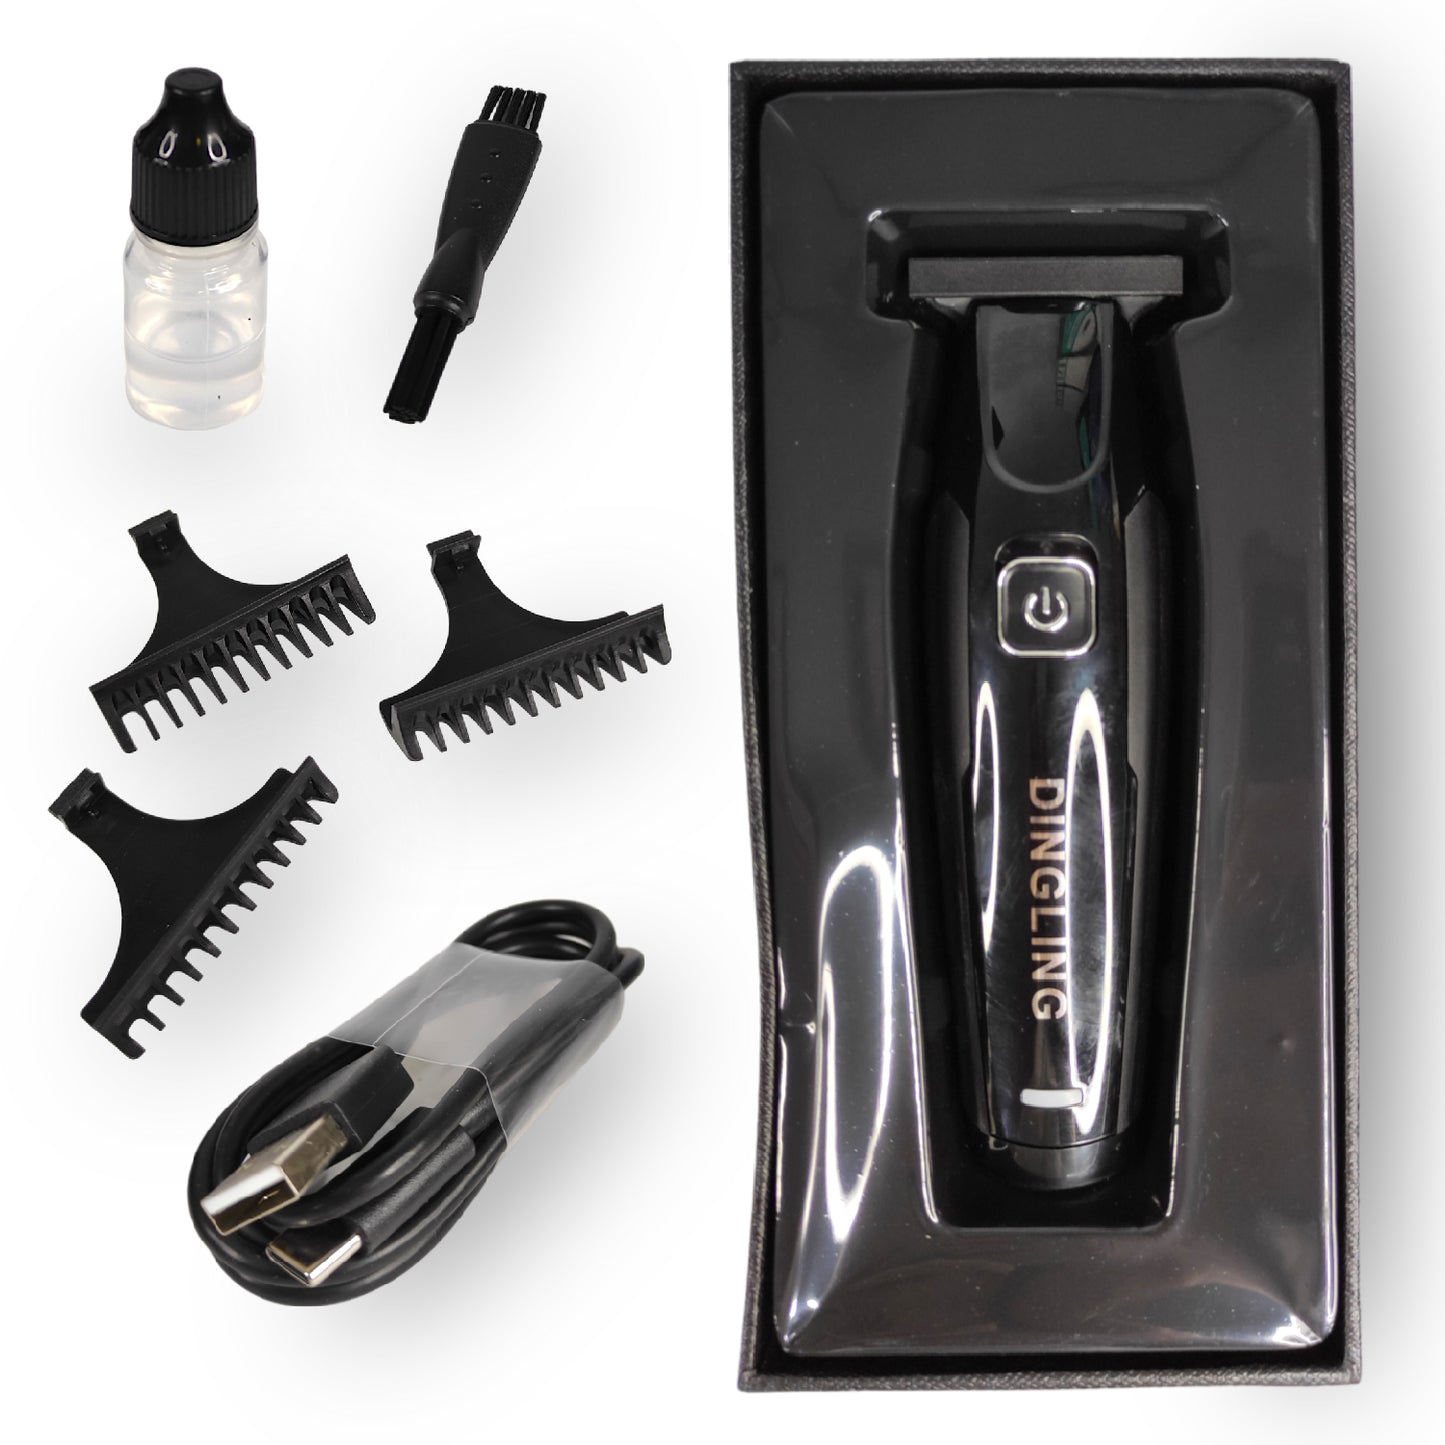 Pro Hair Trimmer Dingling RF-630L - Shaver - Hair Clipper